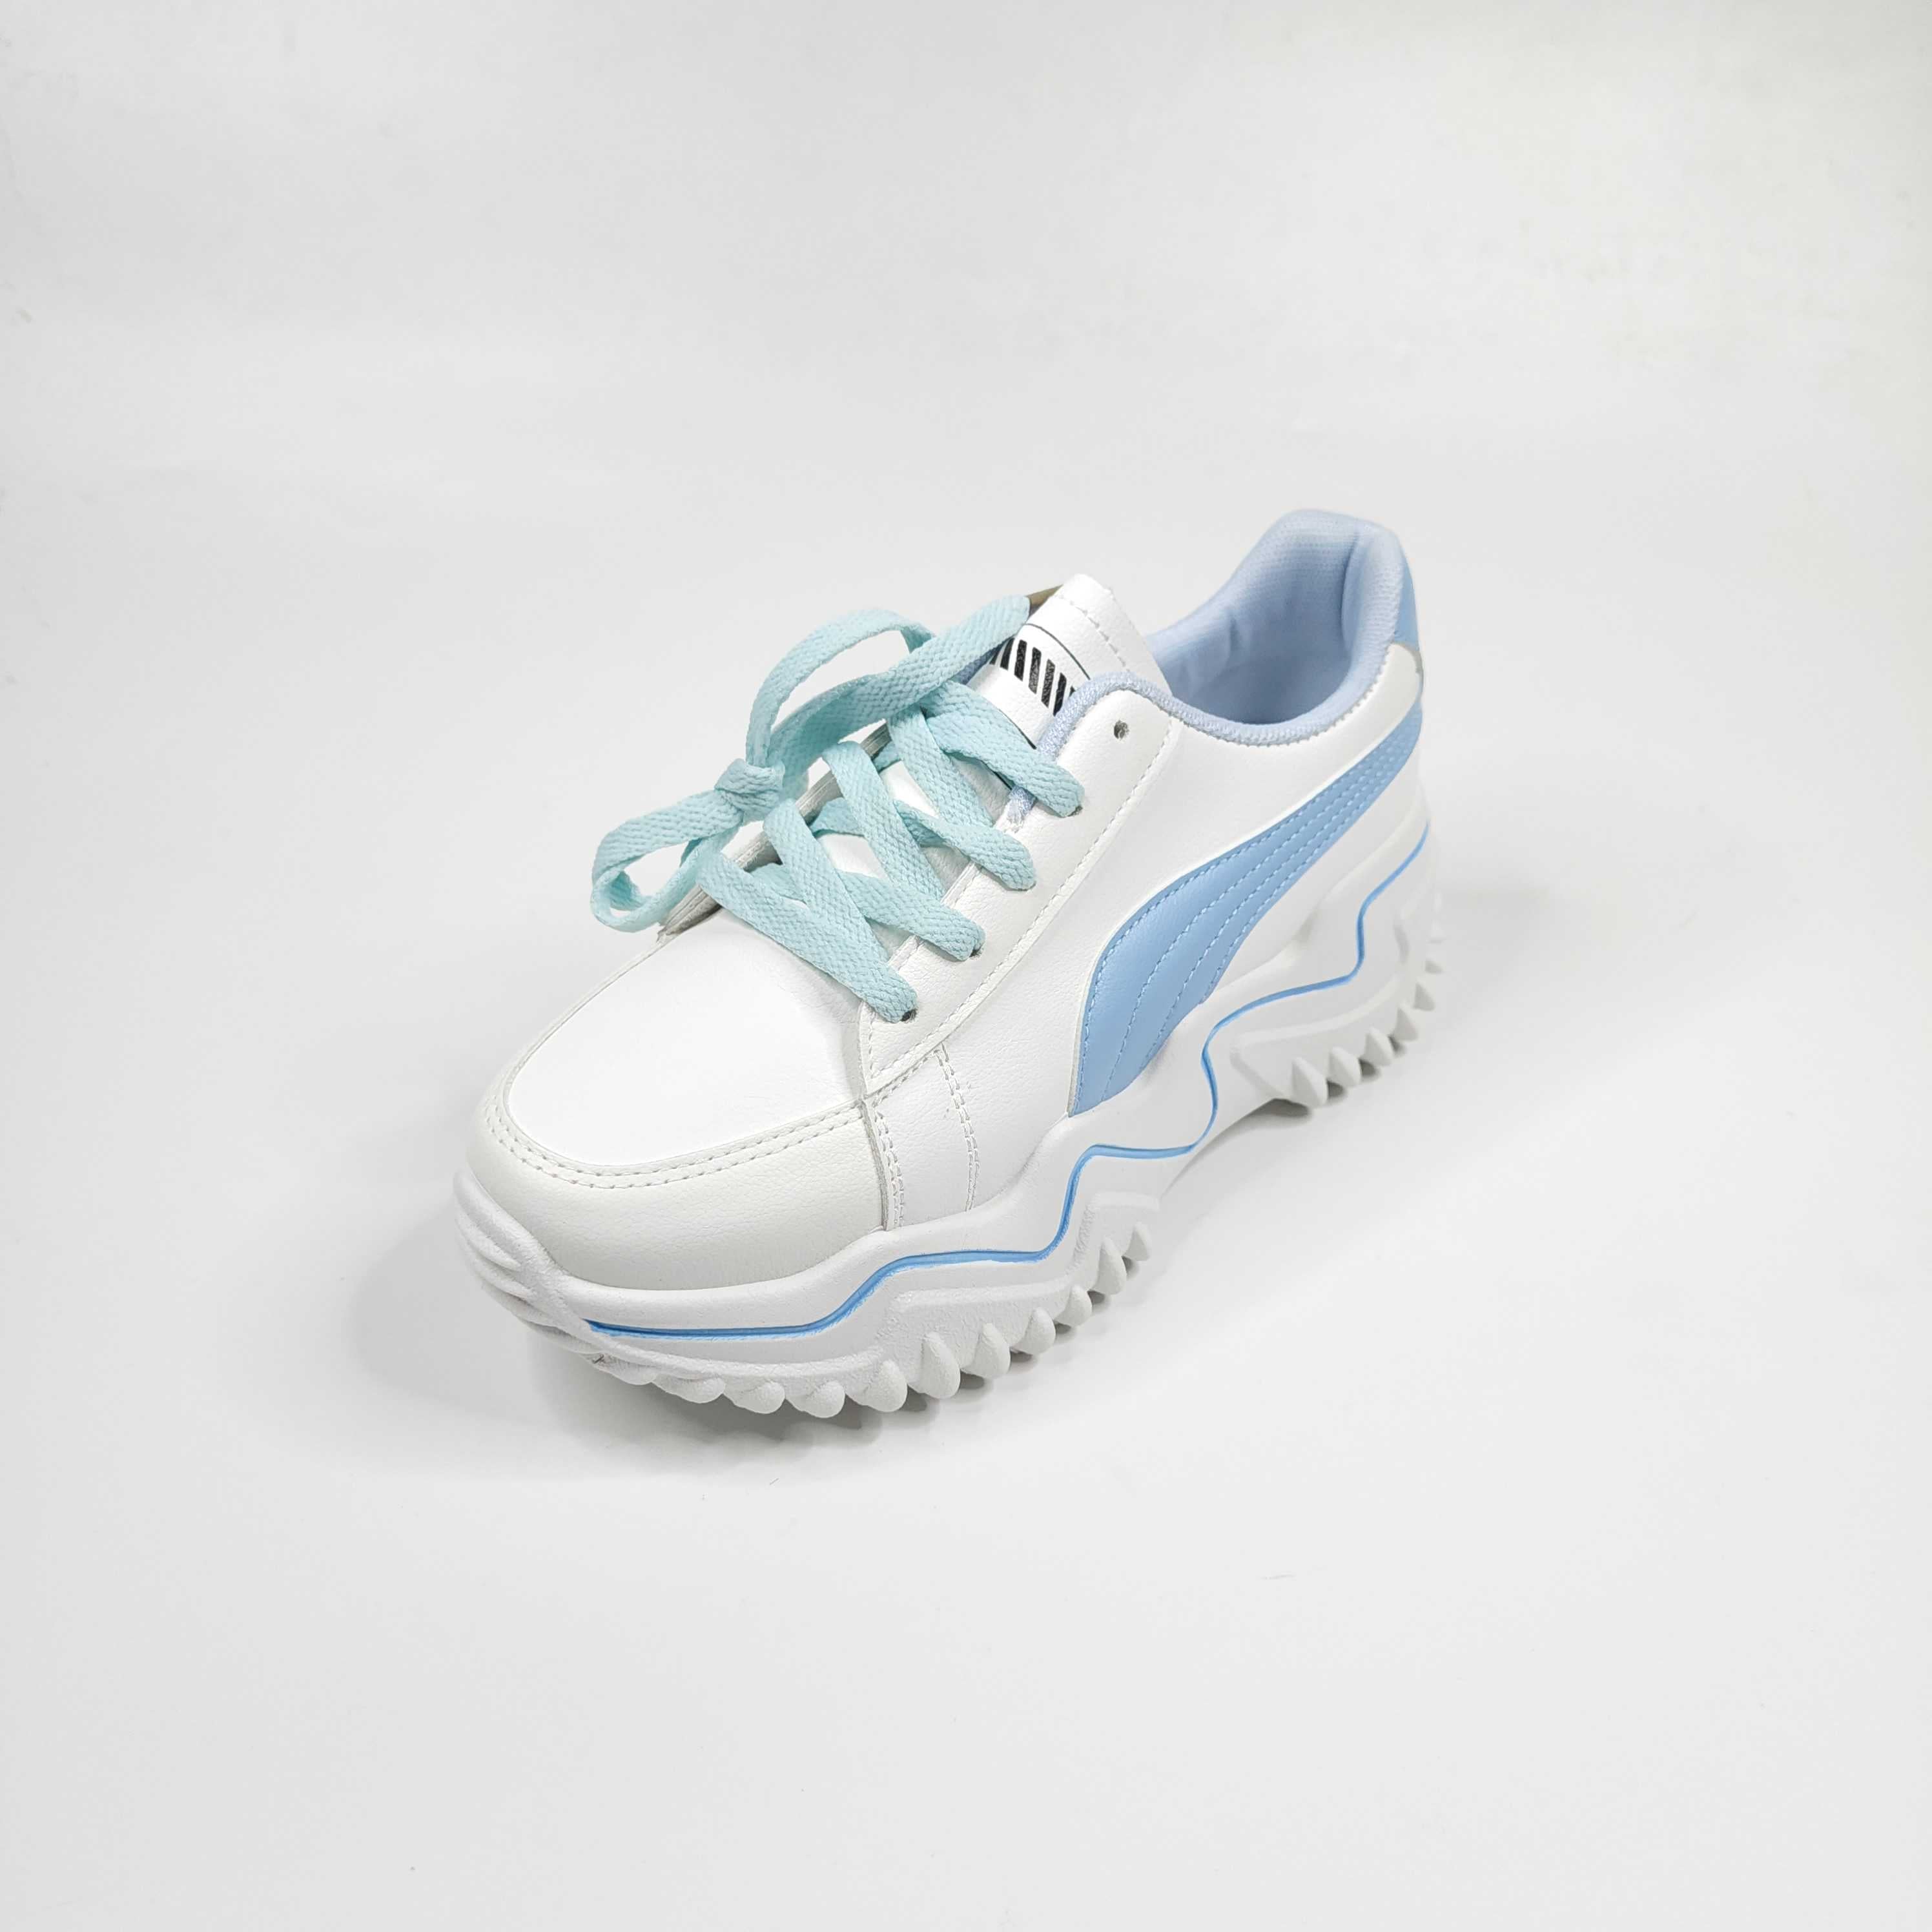 Blue Chunk Shoes - Maha fashions -  